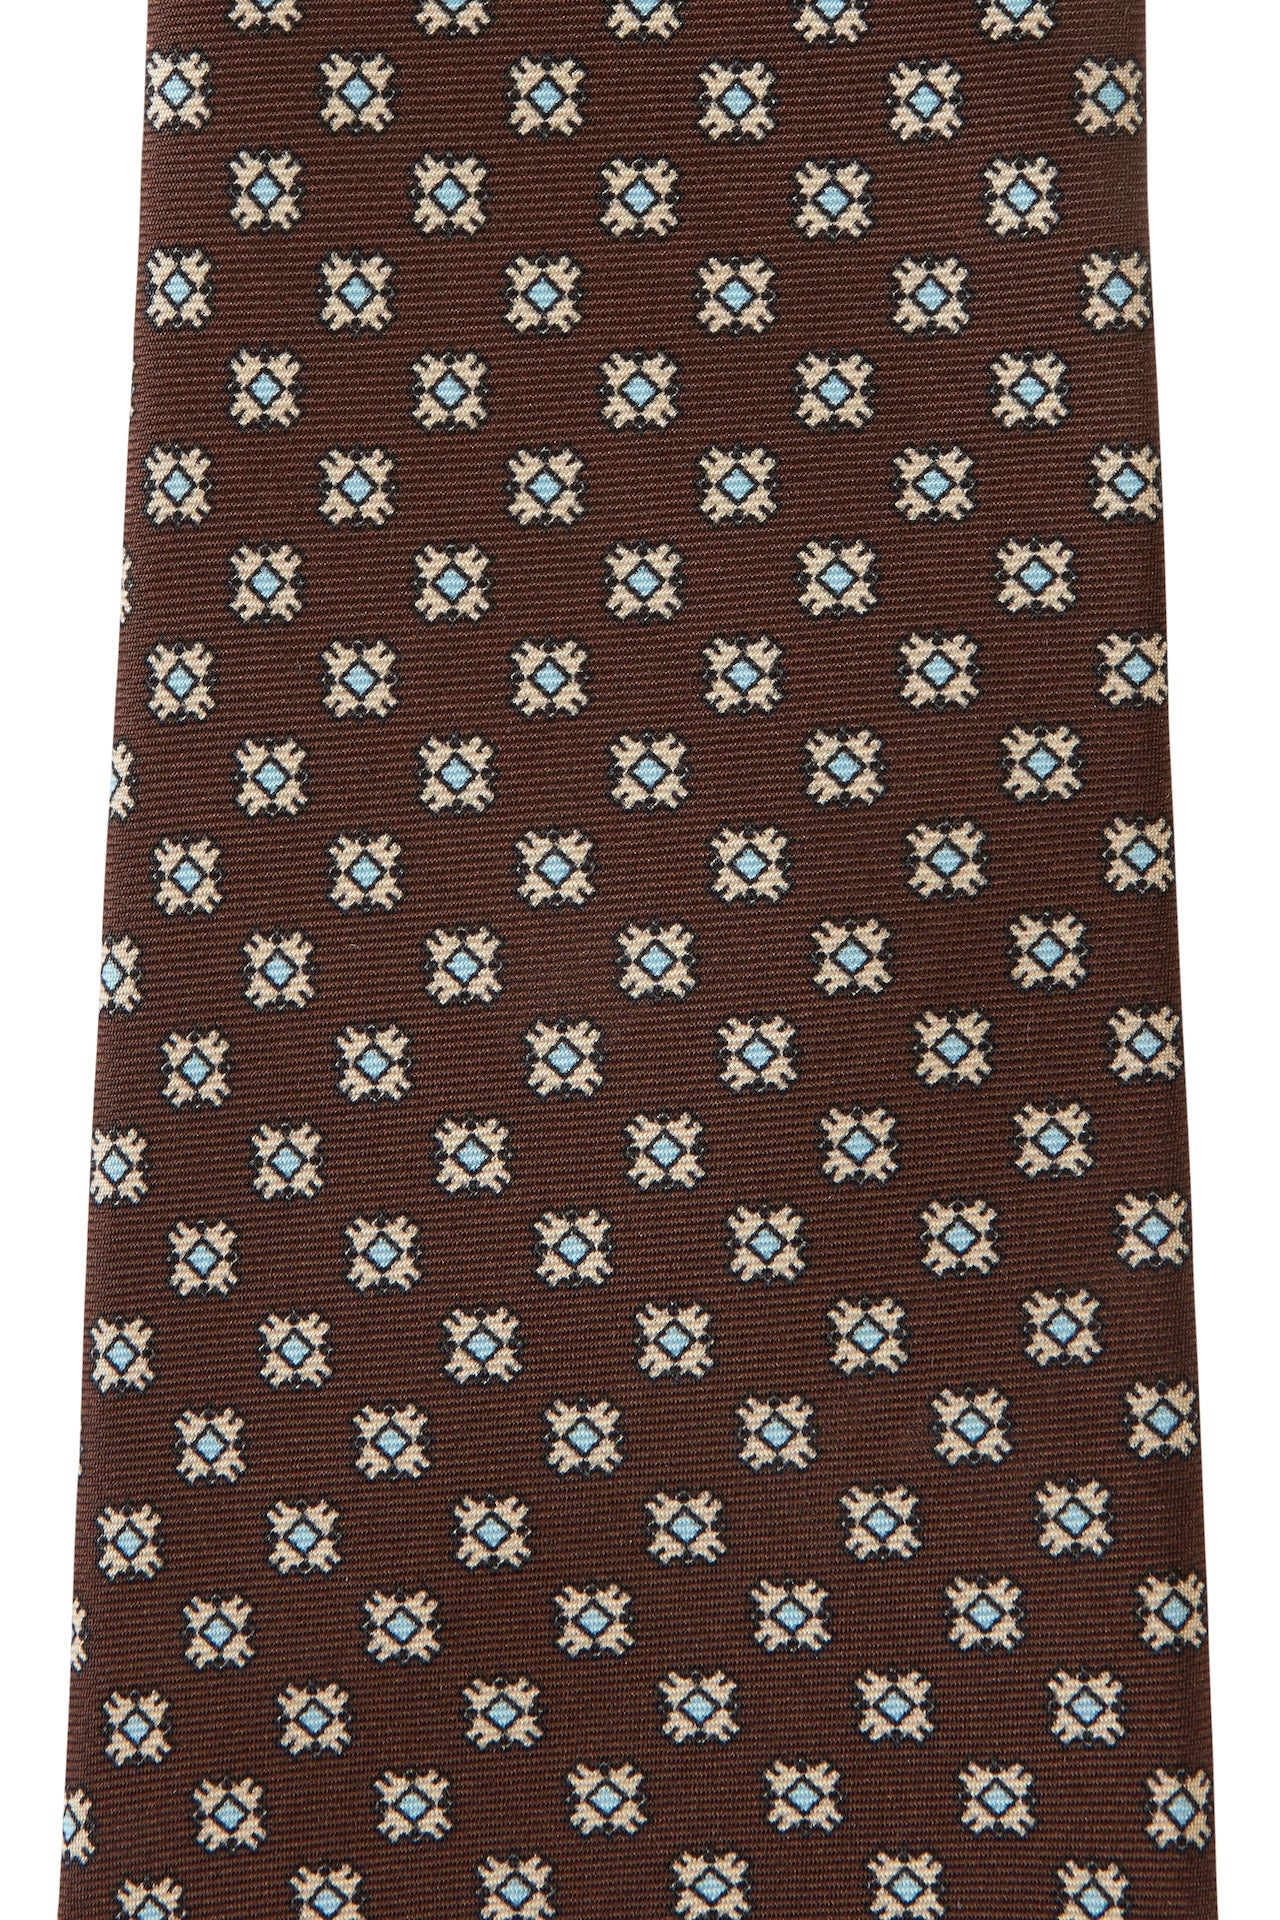 Brown square pattern Tie